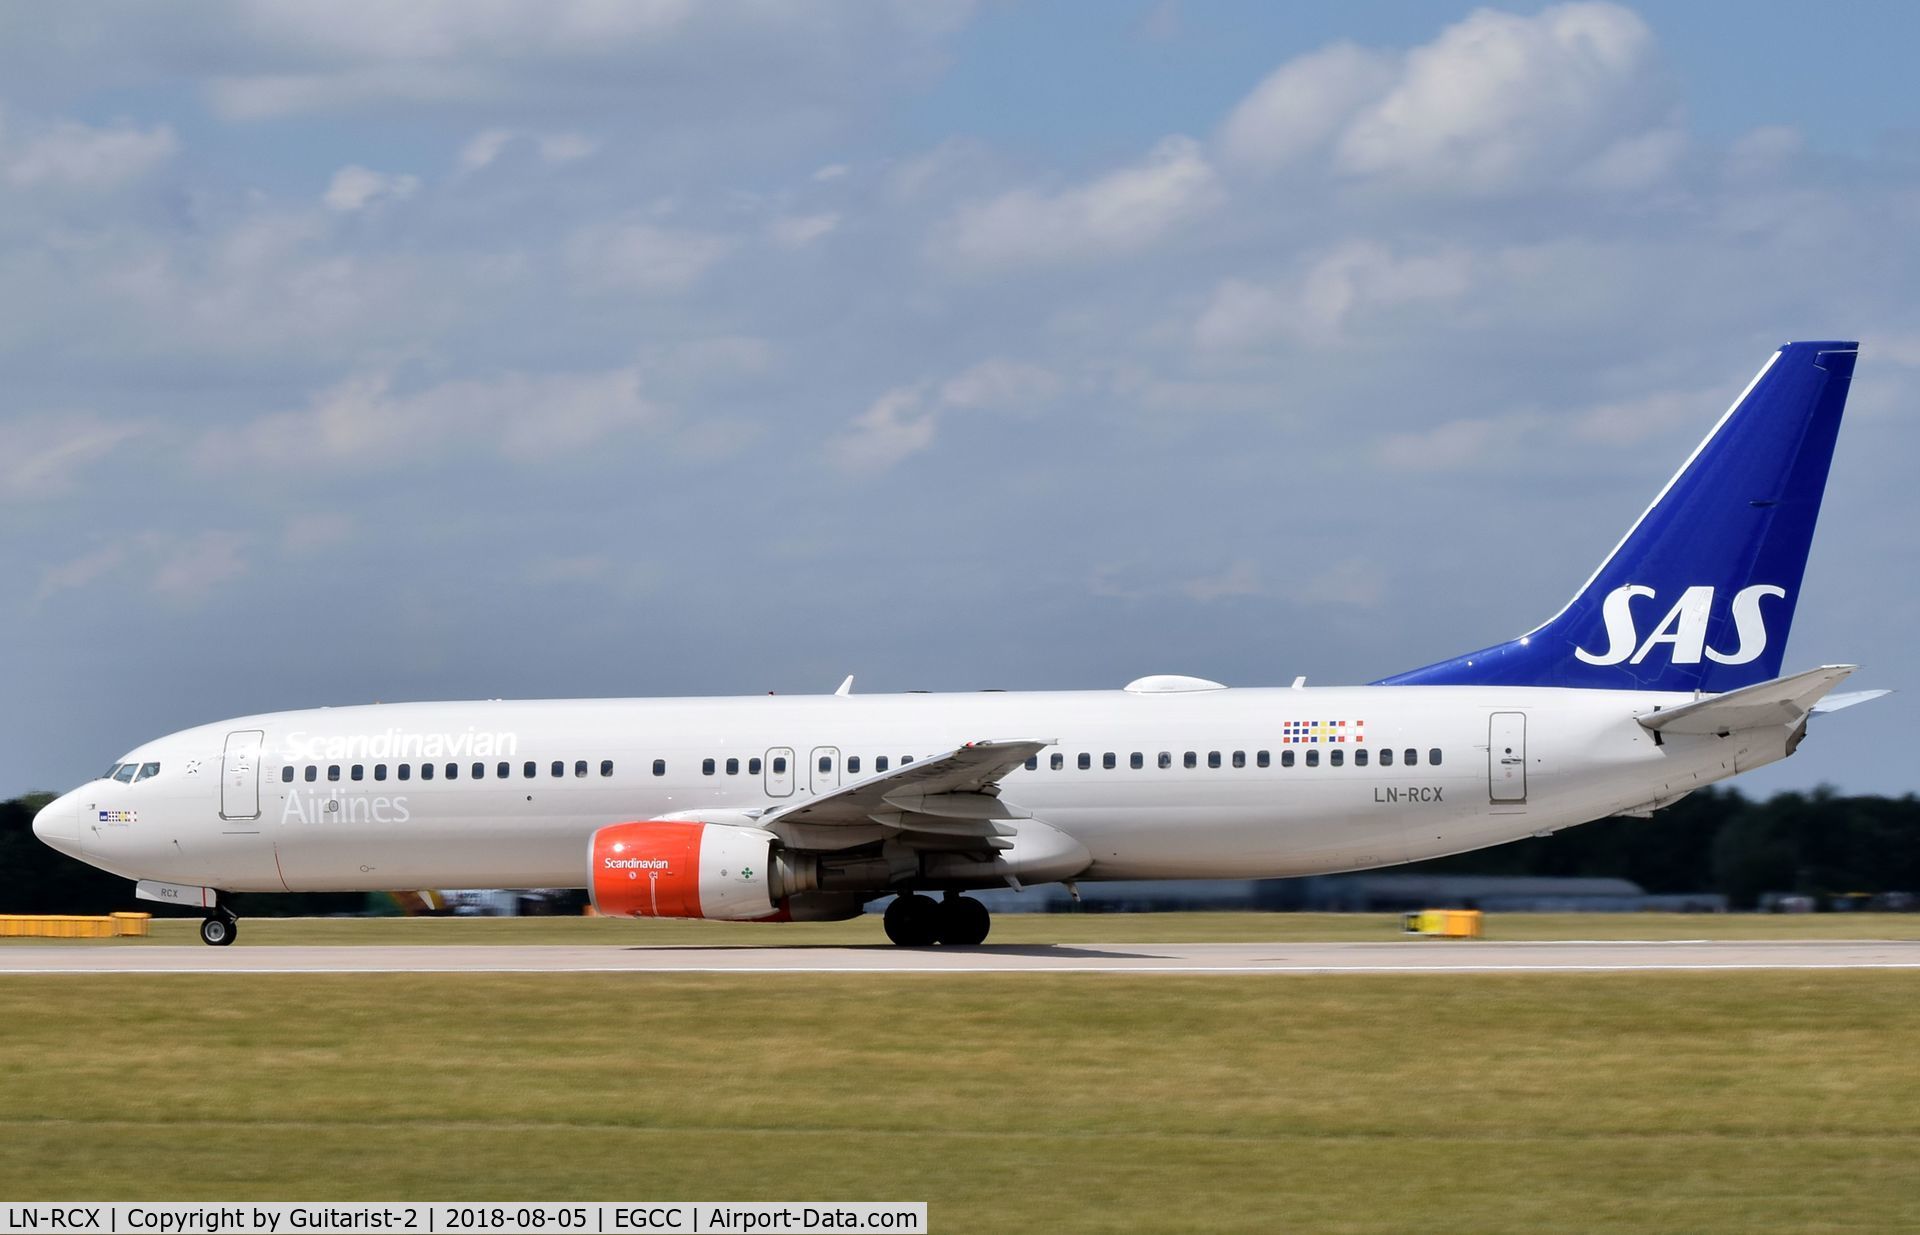 LN-RCX, 2000 Boeing 737-883 C/N 30196, At Manchester